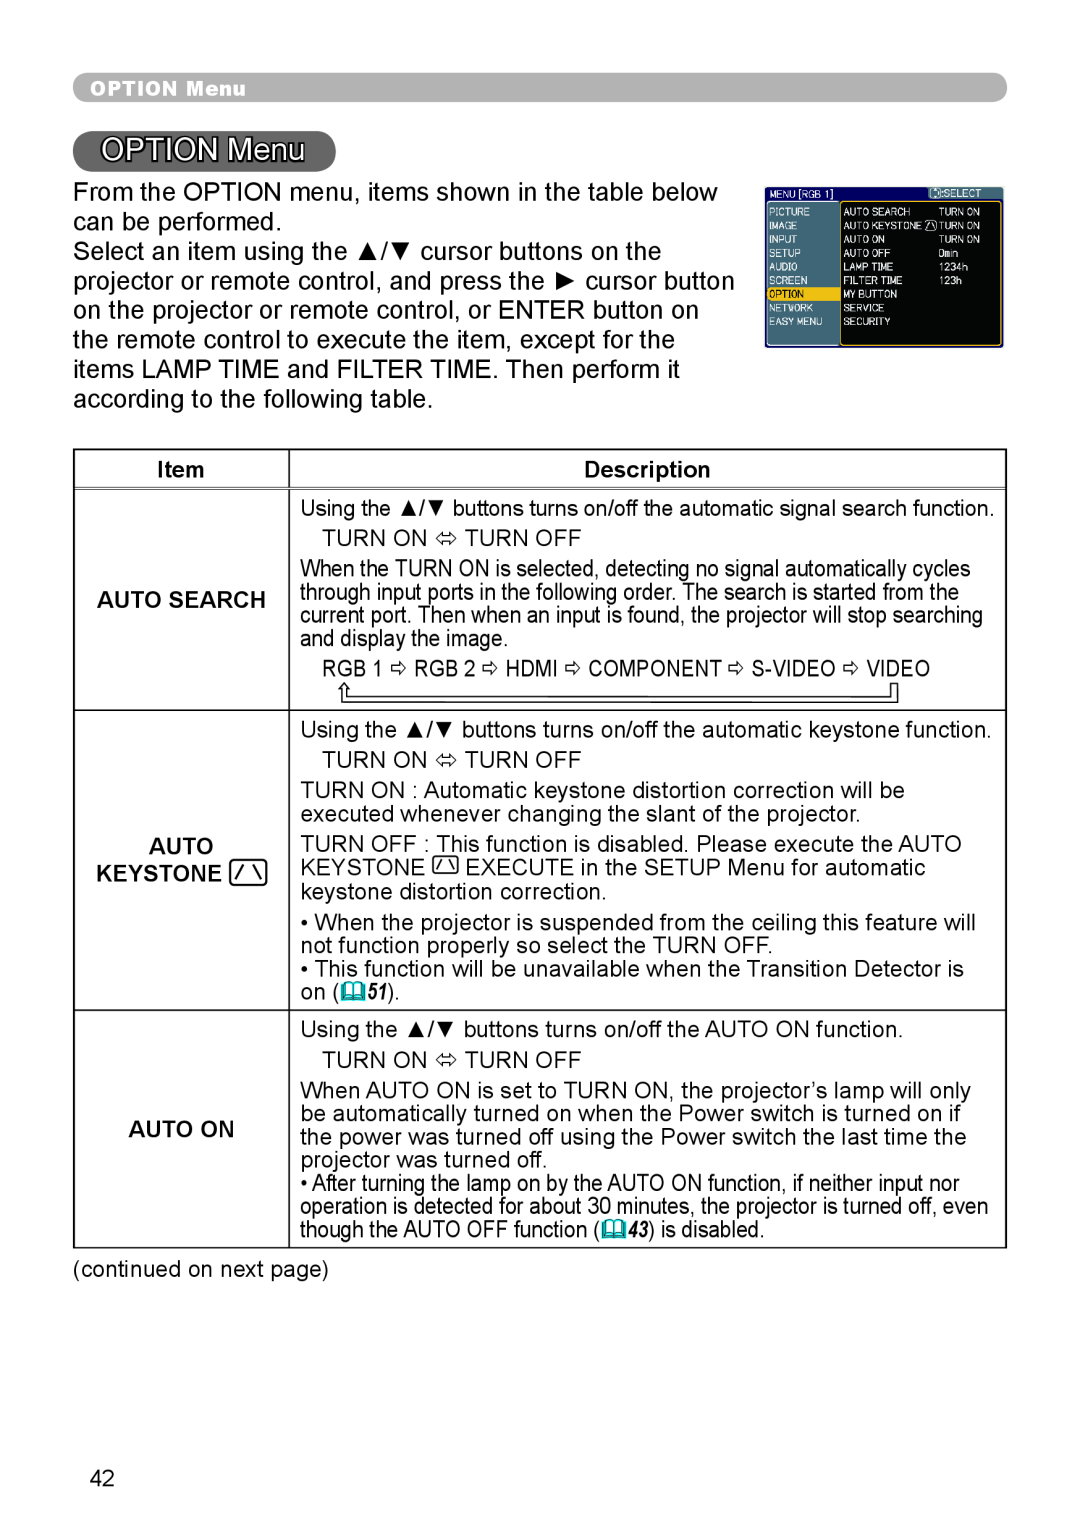 Planar PR9020 user manual OPTION Menu, Description, Auto Search, Keystone, Auto On 